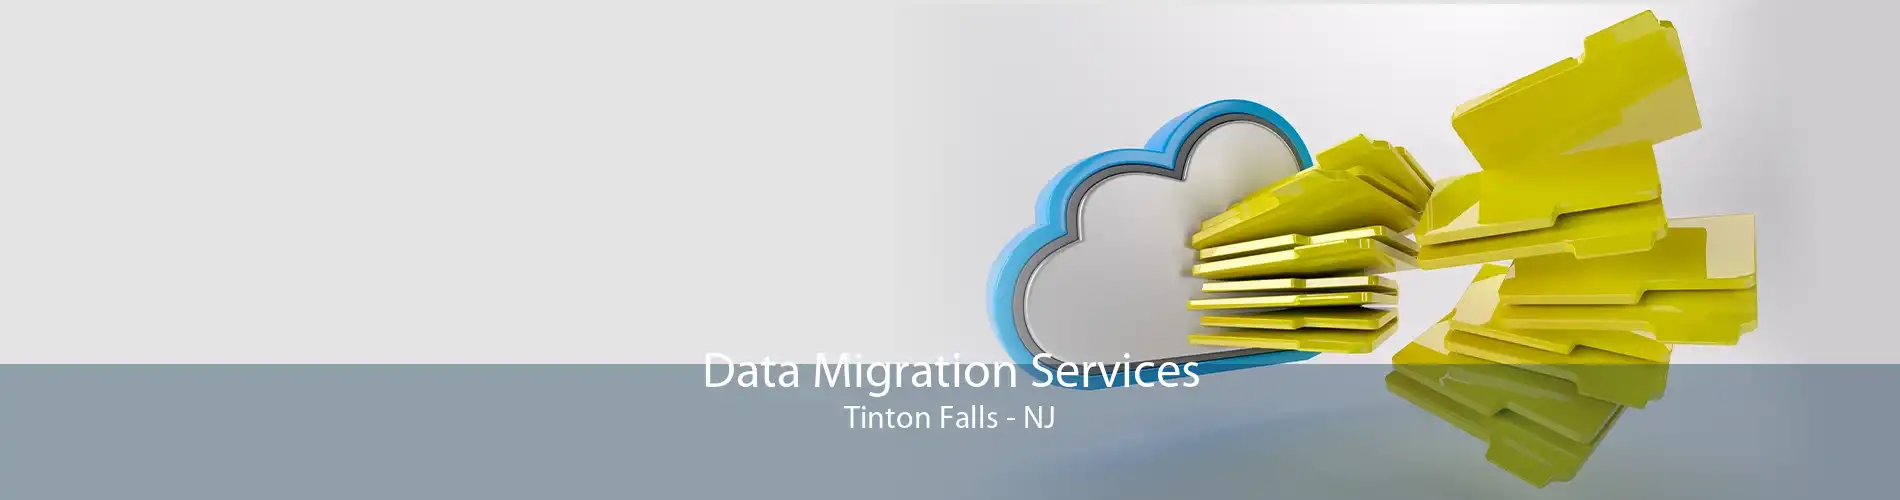 Data Migration Services Tinton Falls - NJ